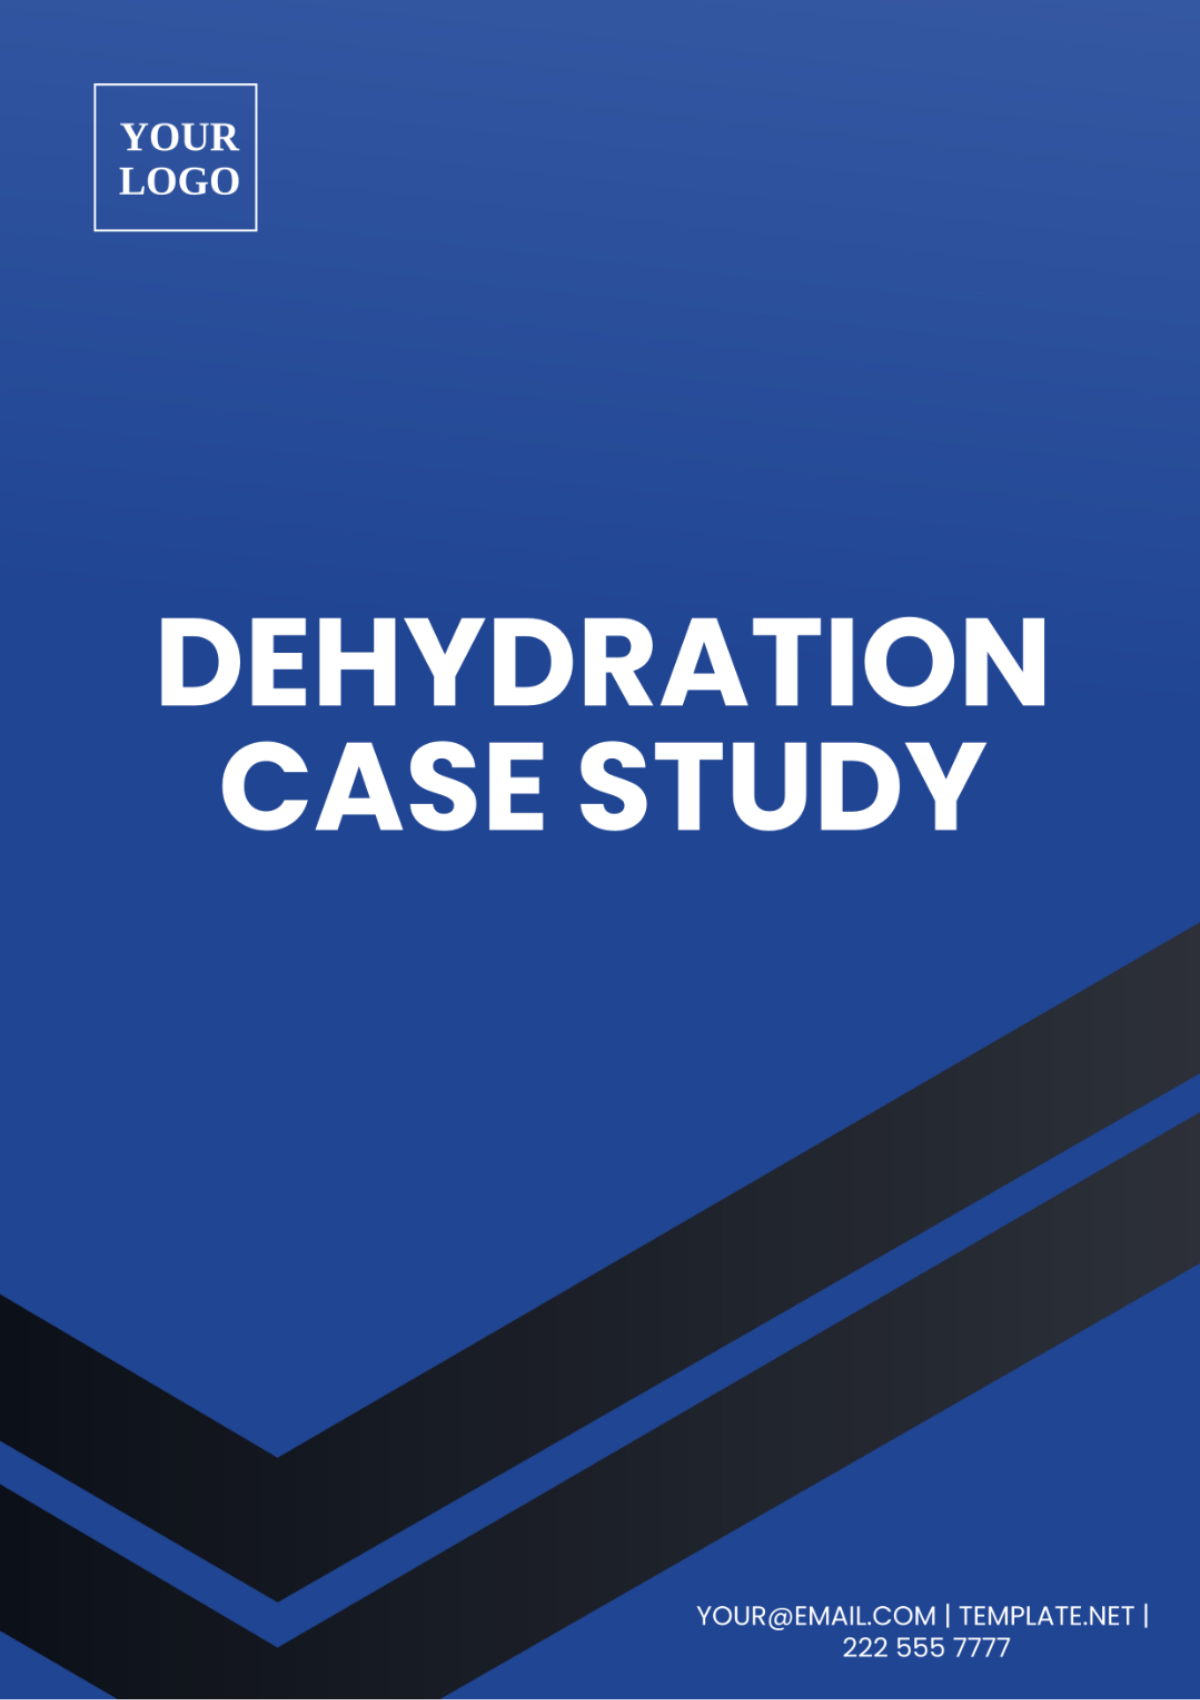 Dehydration Case Study Template